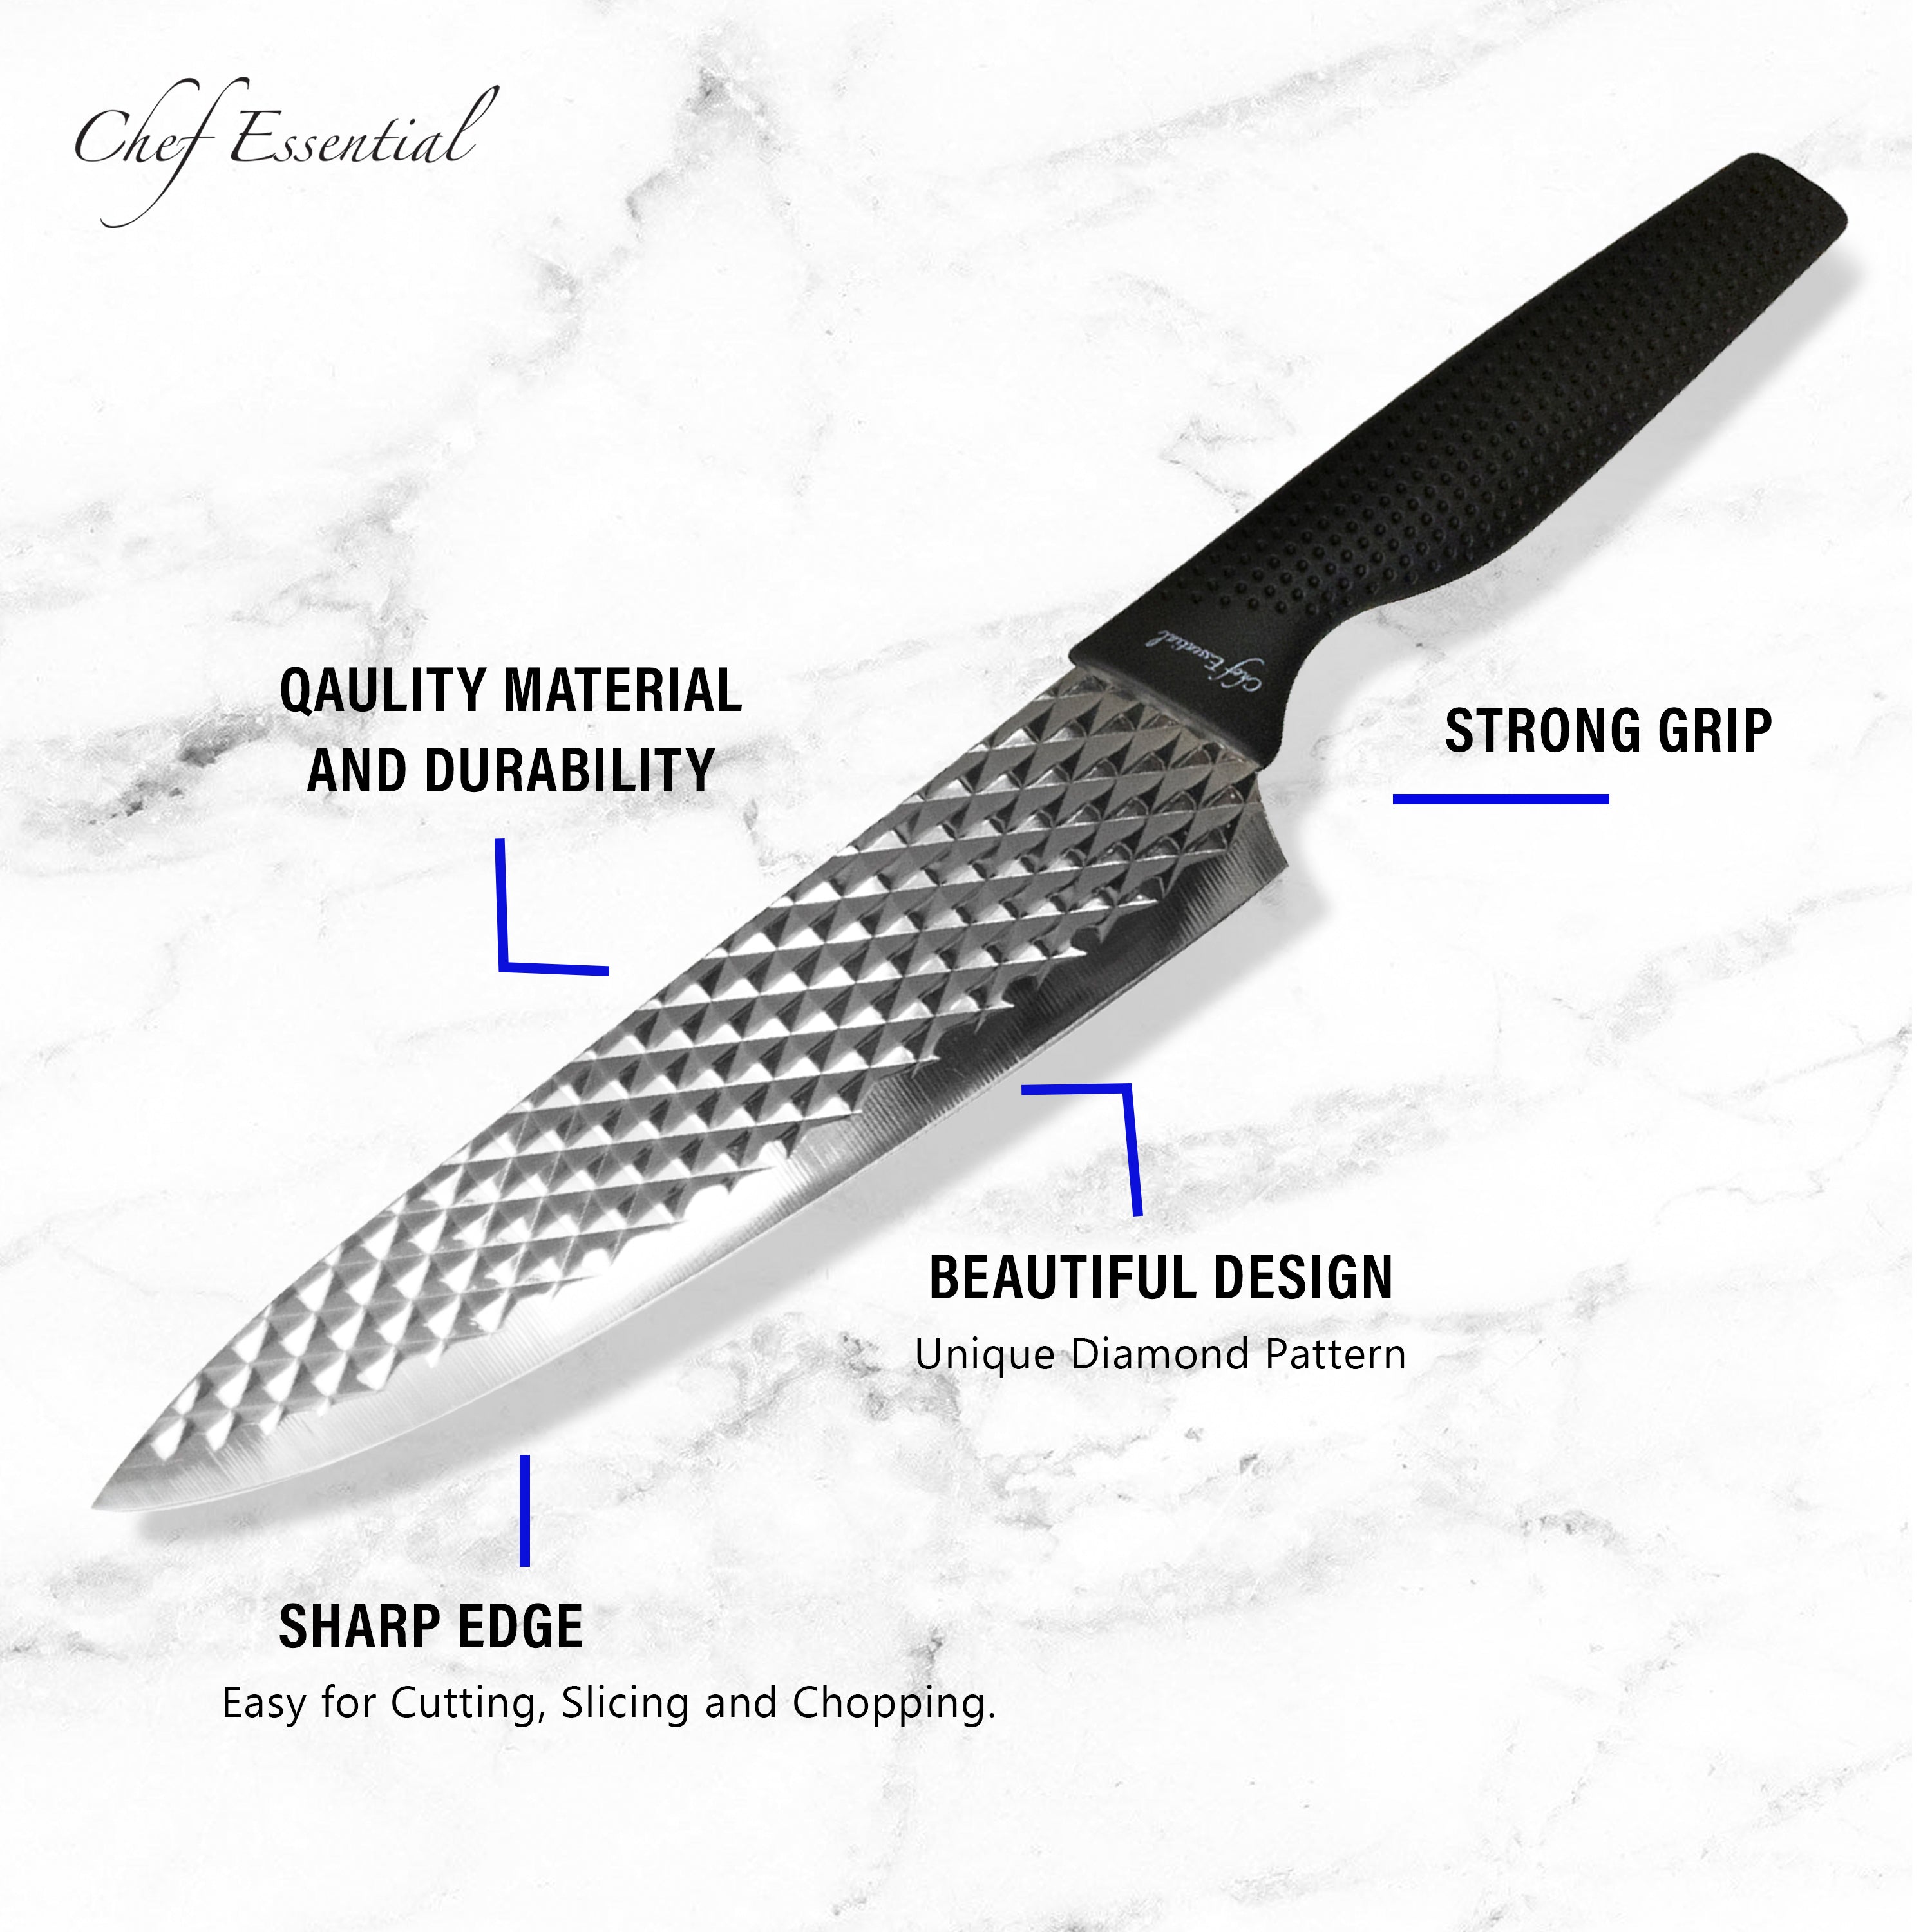 Kitsin Chef Knife Set of 6 Black Sharp Kitchen Stainless Steel Knife Set,  Dishwasher Safe